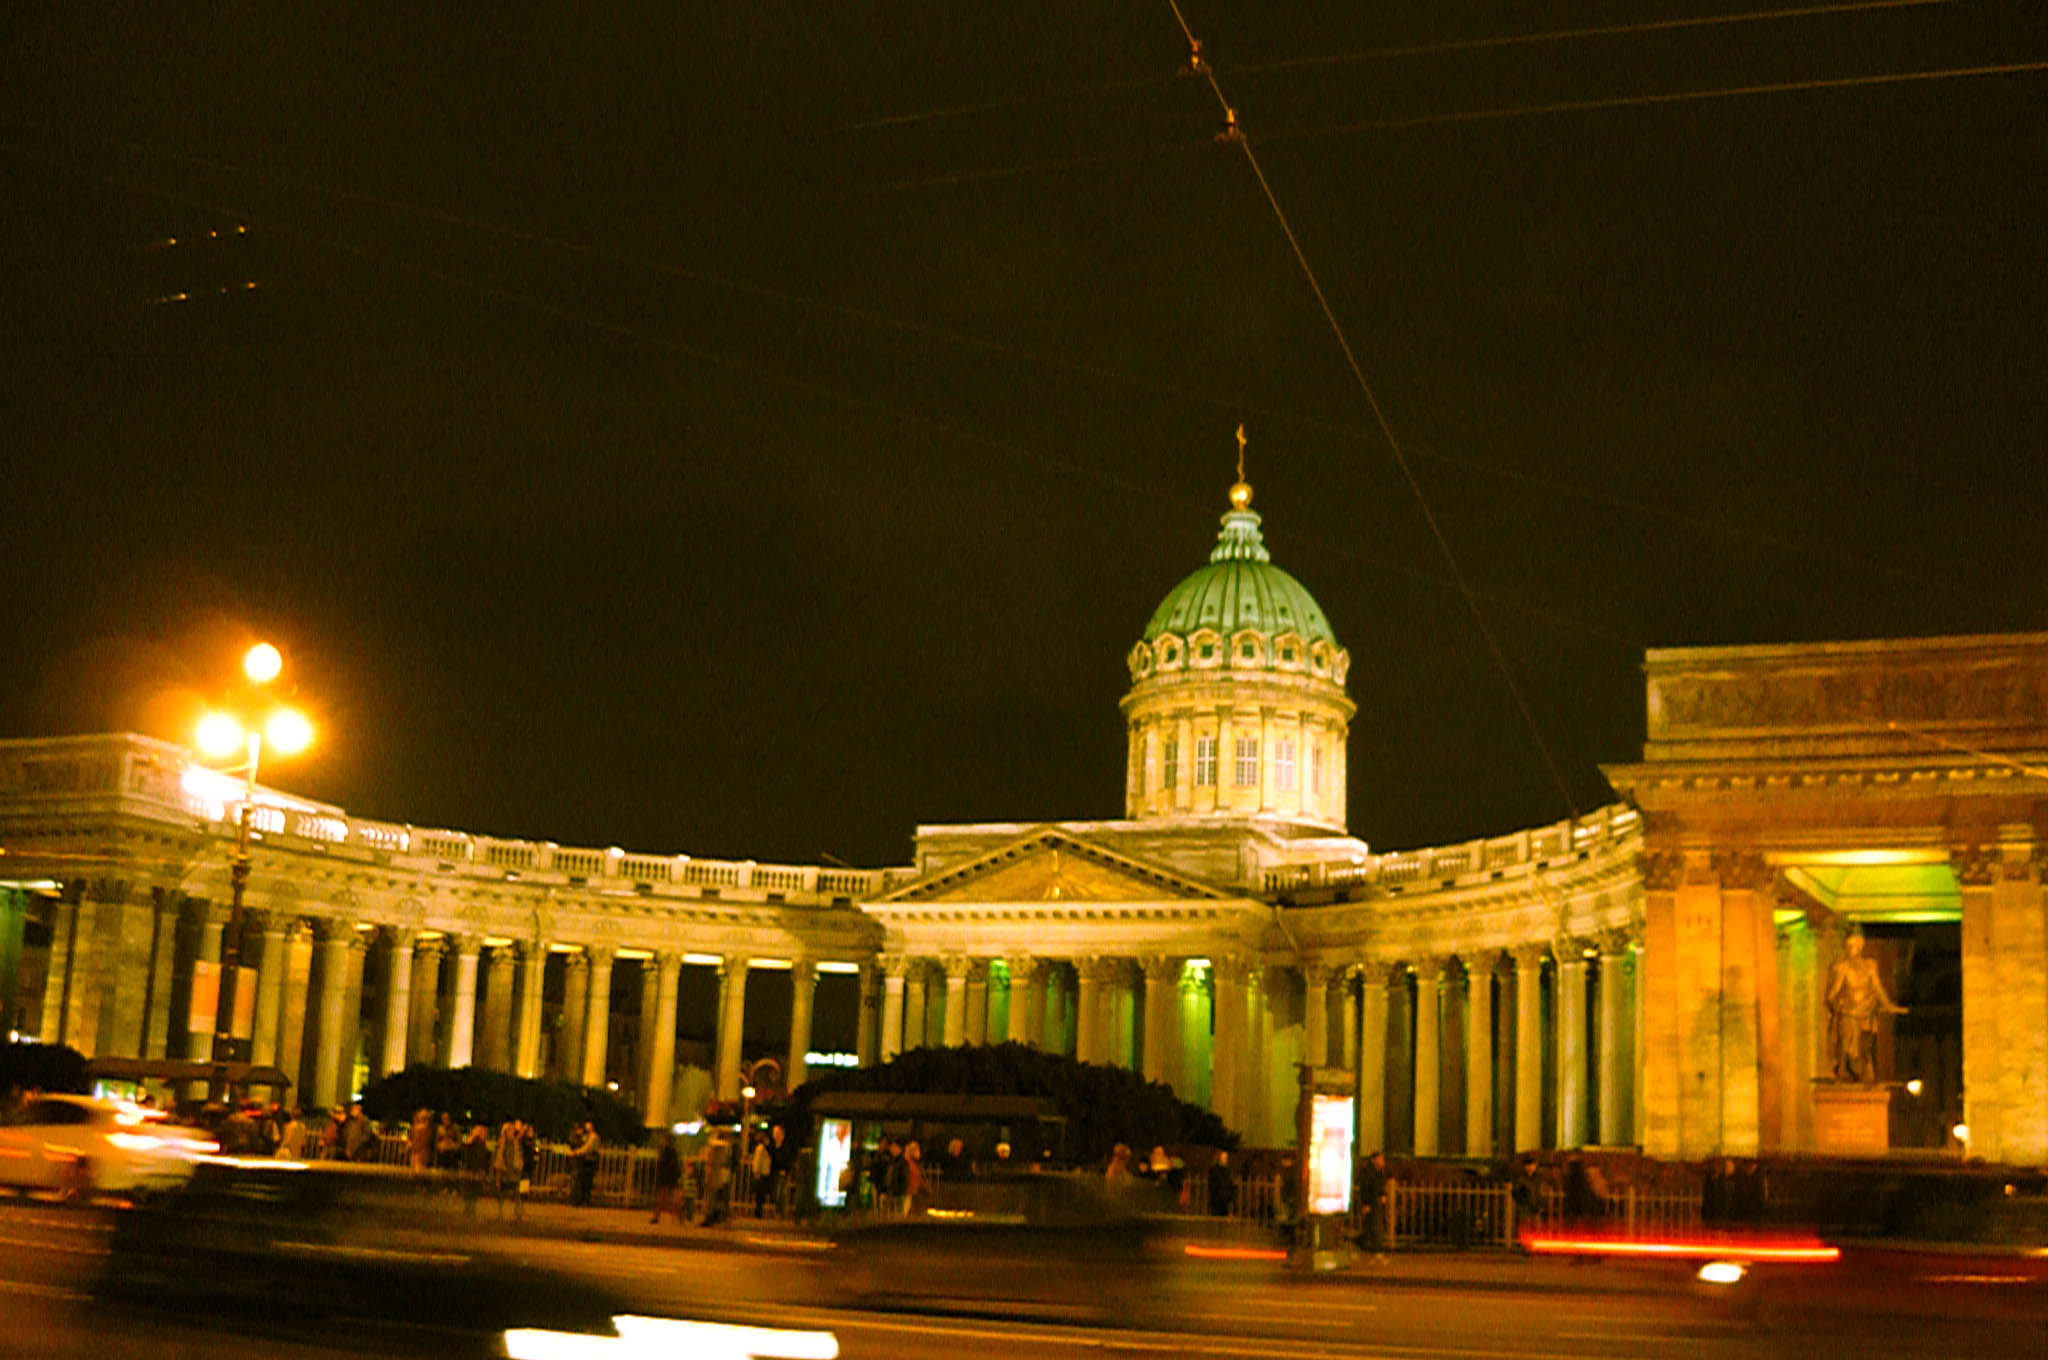 Kazanian cathedral front (Saint-Petersburg) [Alexander Shemetev]